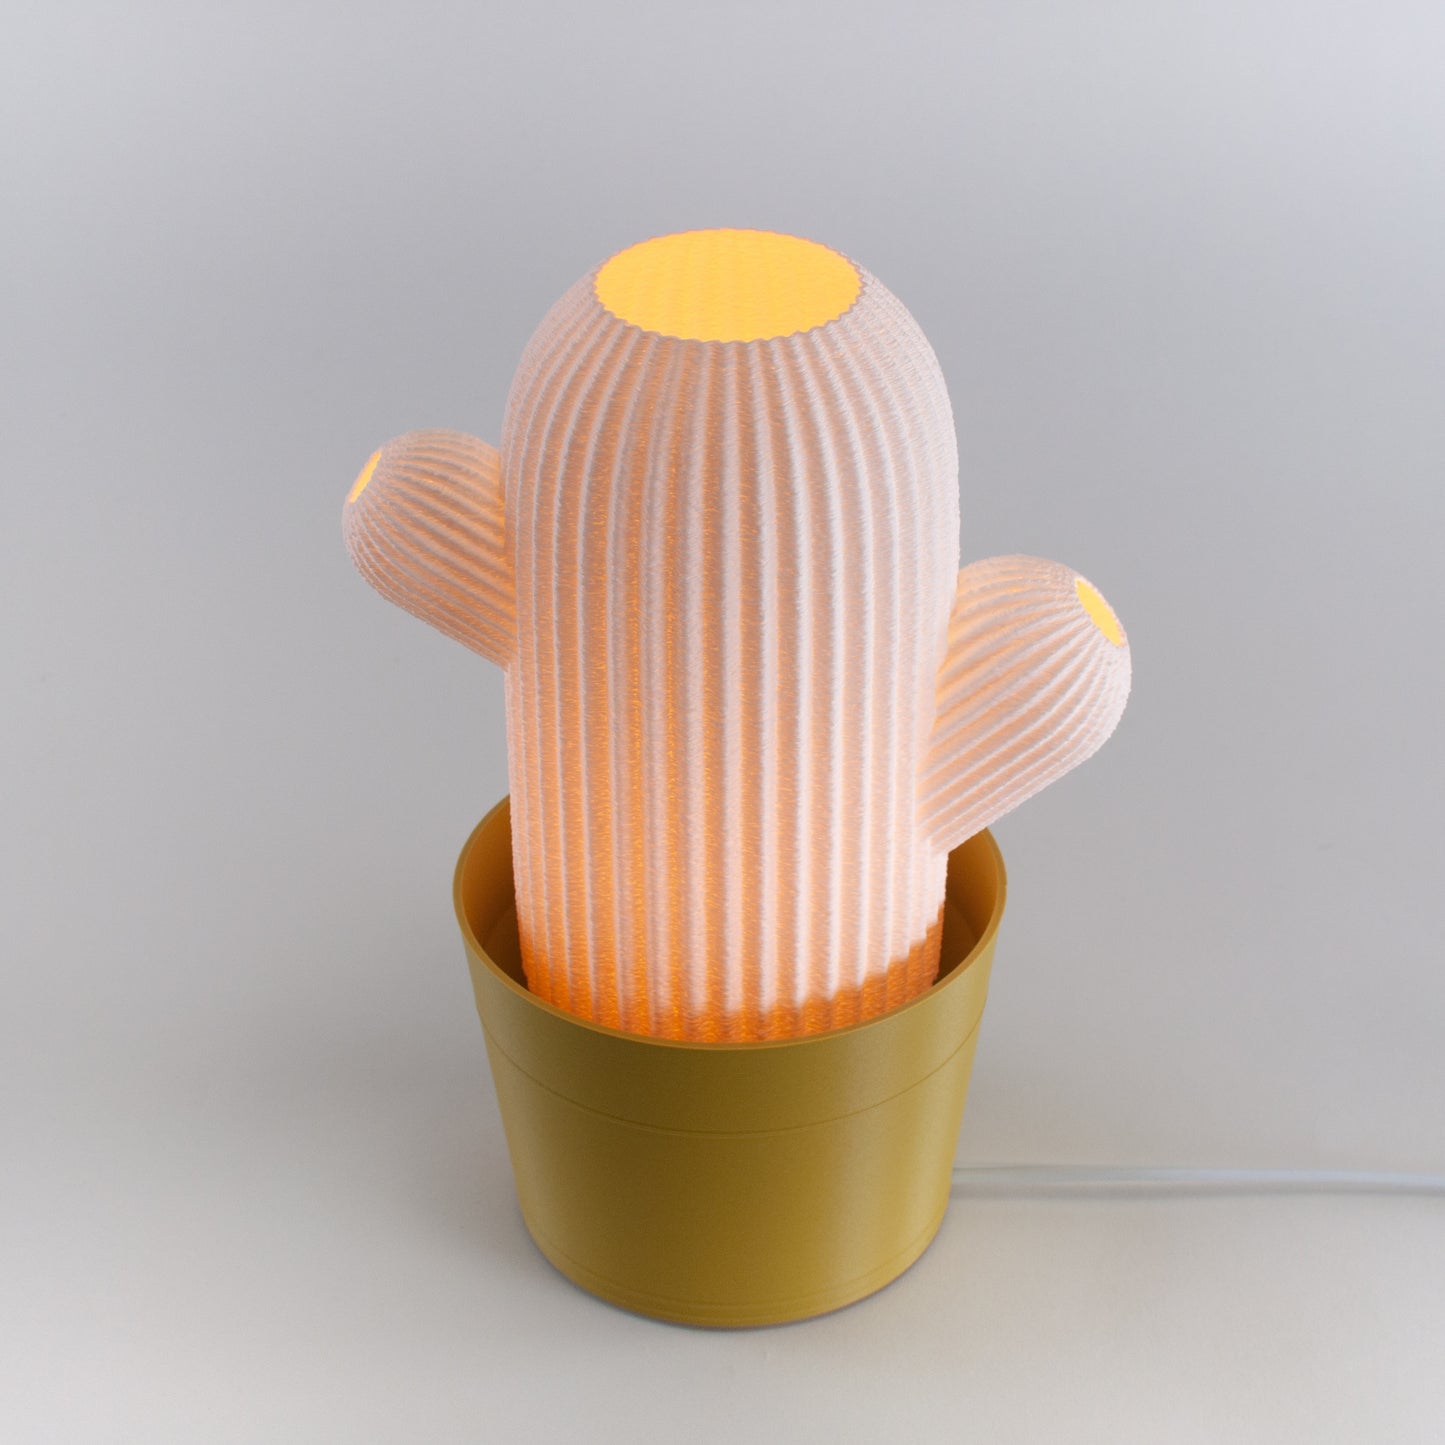 Mika Cactus Table Lamp